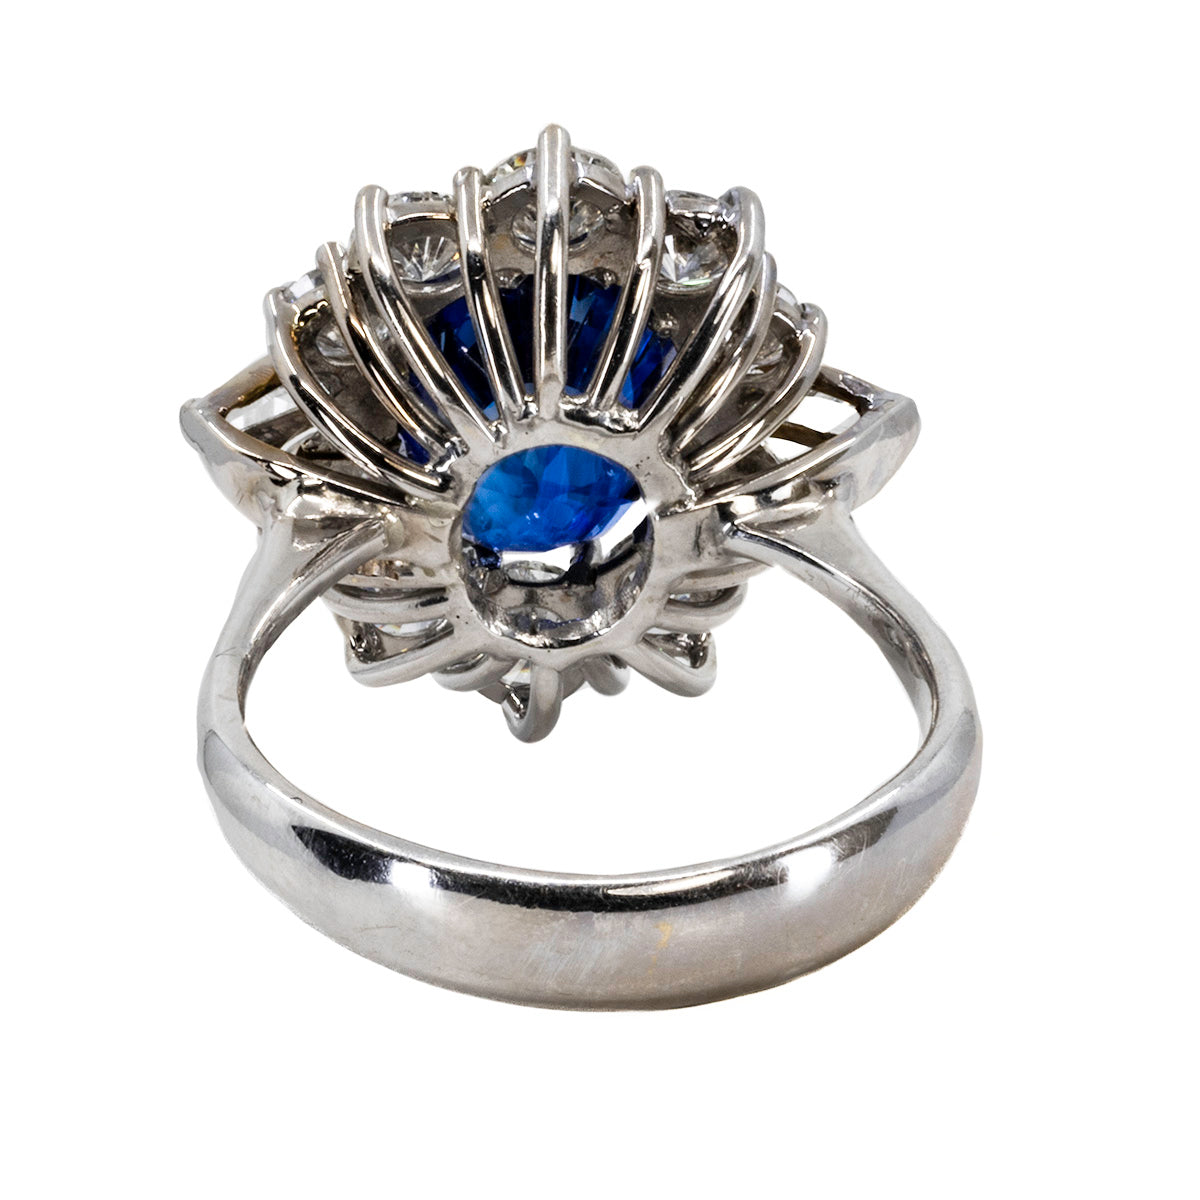 6.37 Carat Royal Blue Sapphire Ring